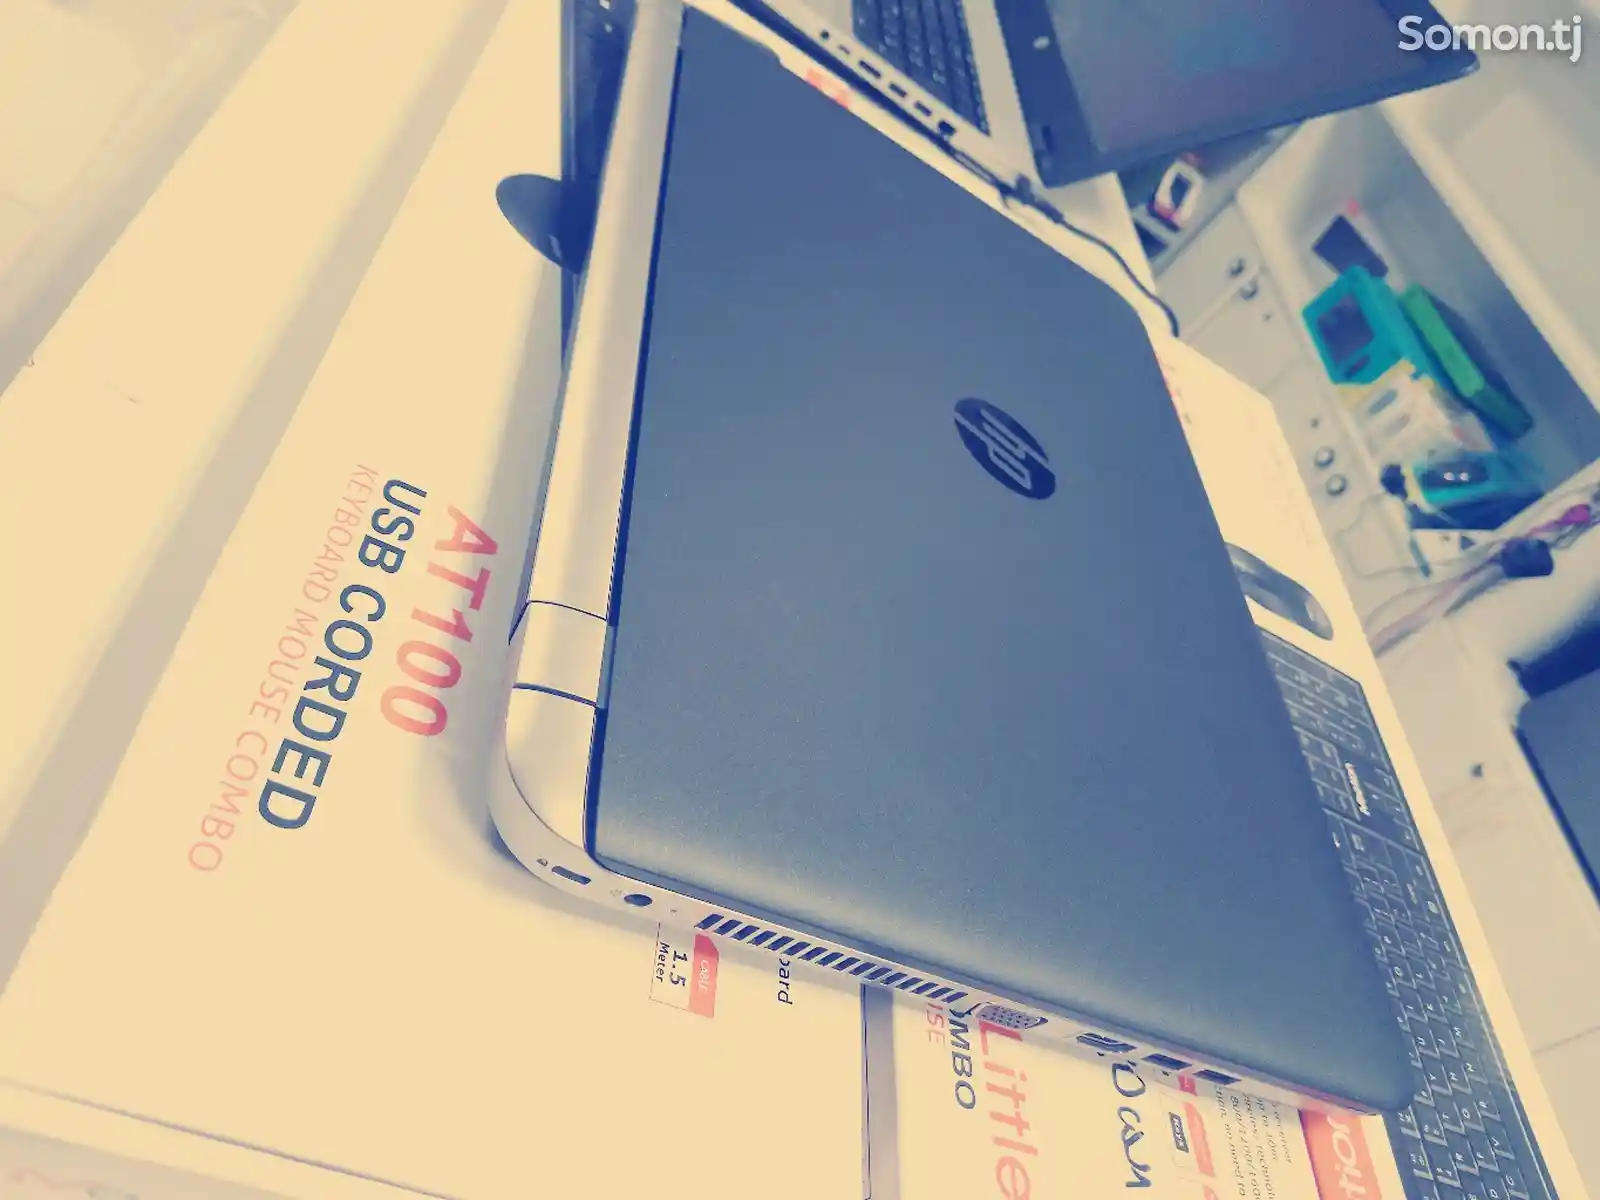 Ноутбук HP Probook g450 g3 Core i5 6TH 2.40GHz DDR4 8gb-5